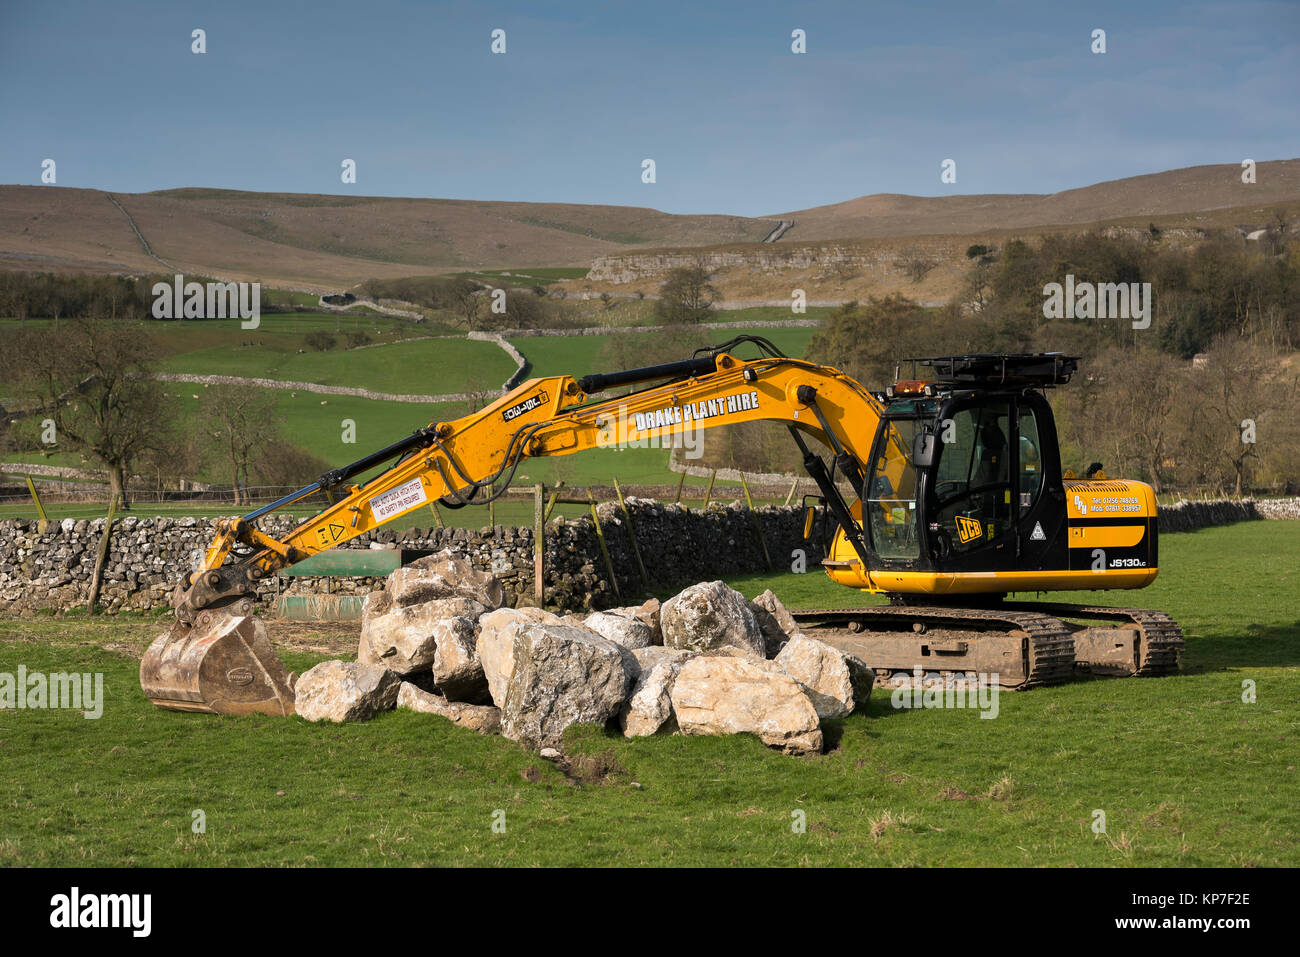 Hellgelb JCB JS130LC Raupenbagger steht auf dem Land Bauernhof Feld, bereit, schwere Felsbrocken heben - Kilnsey, Yorkshire Dales, England, UK. Stockfoto